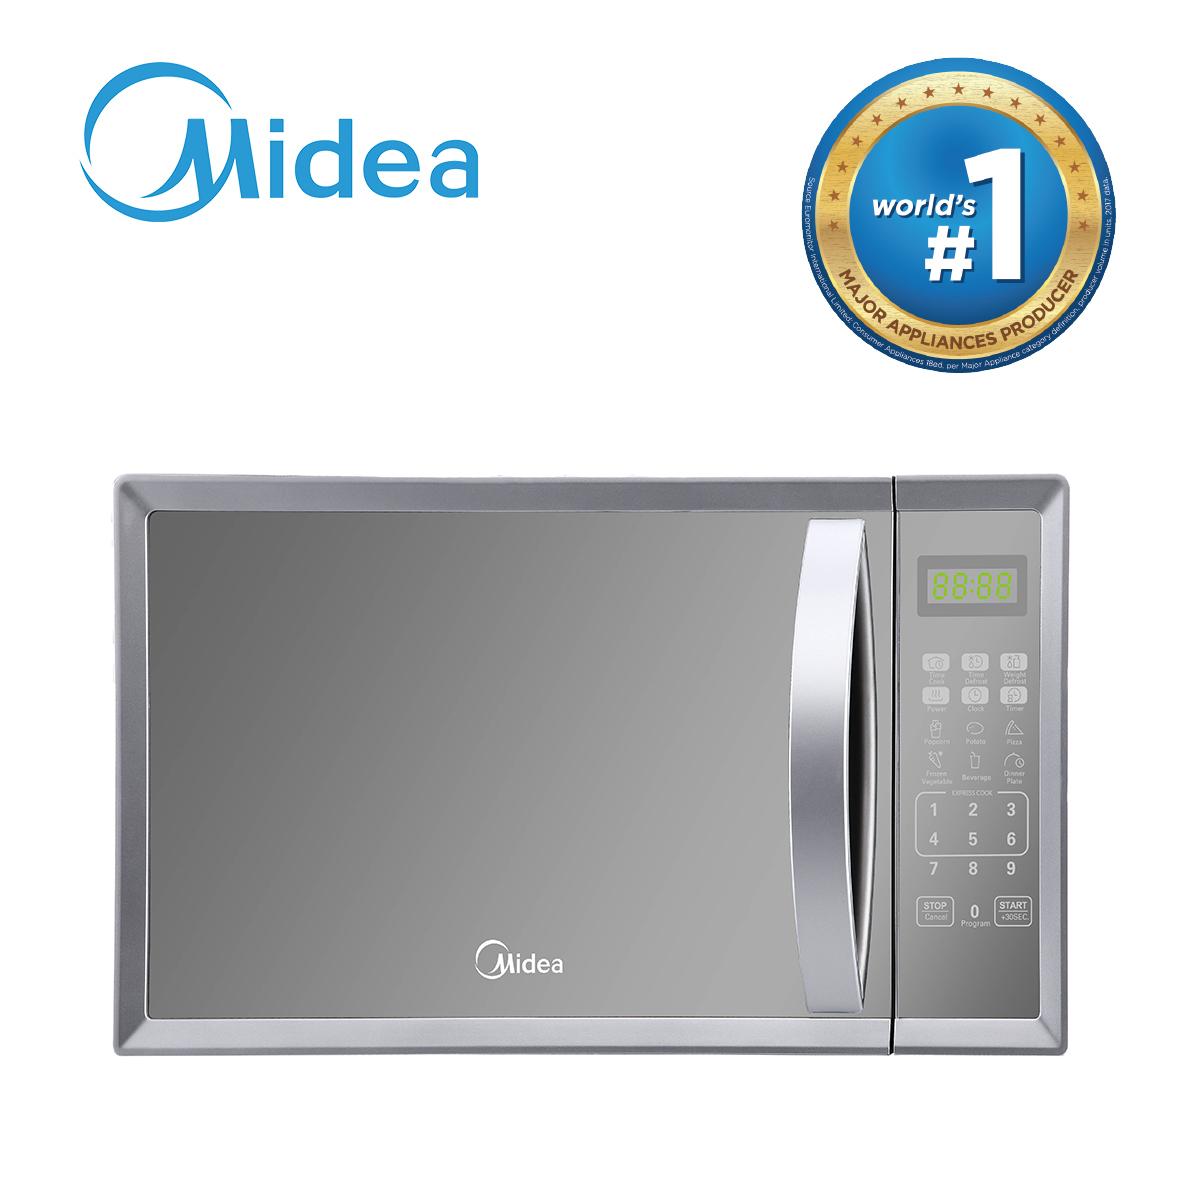 Buy Microwaves at Best Price Online | lazada.com.ph - 